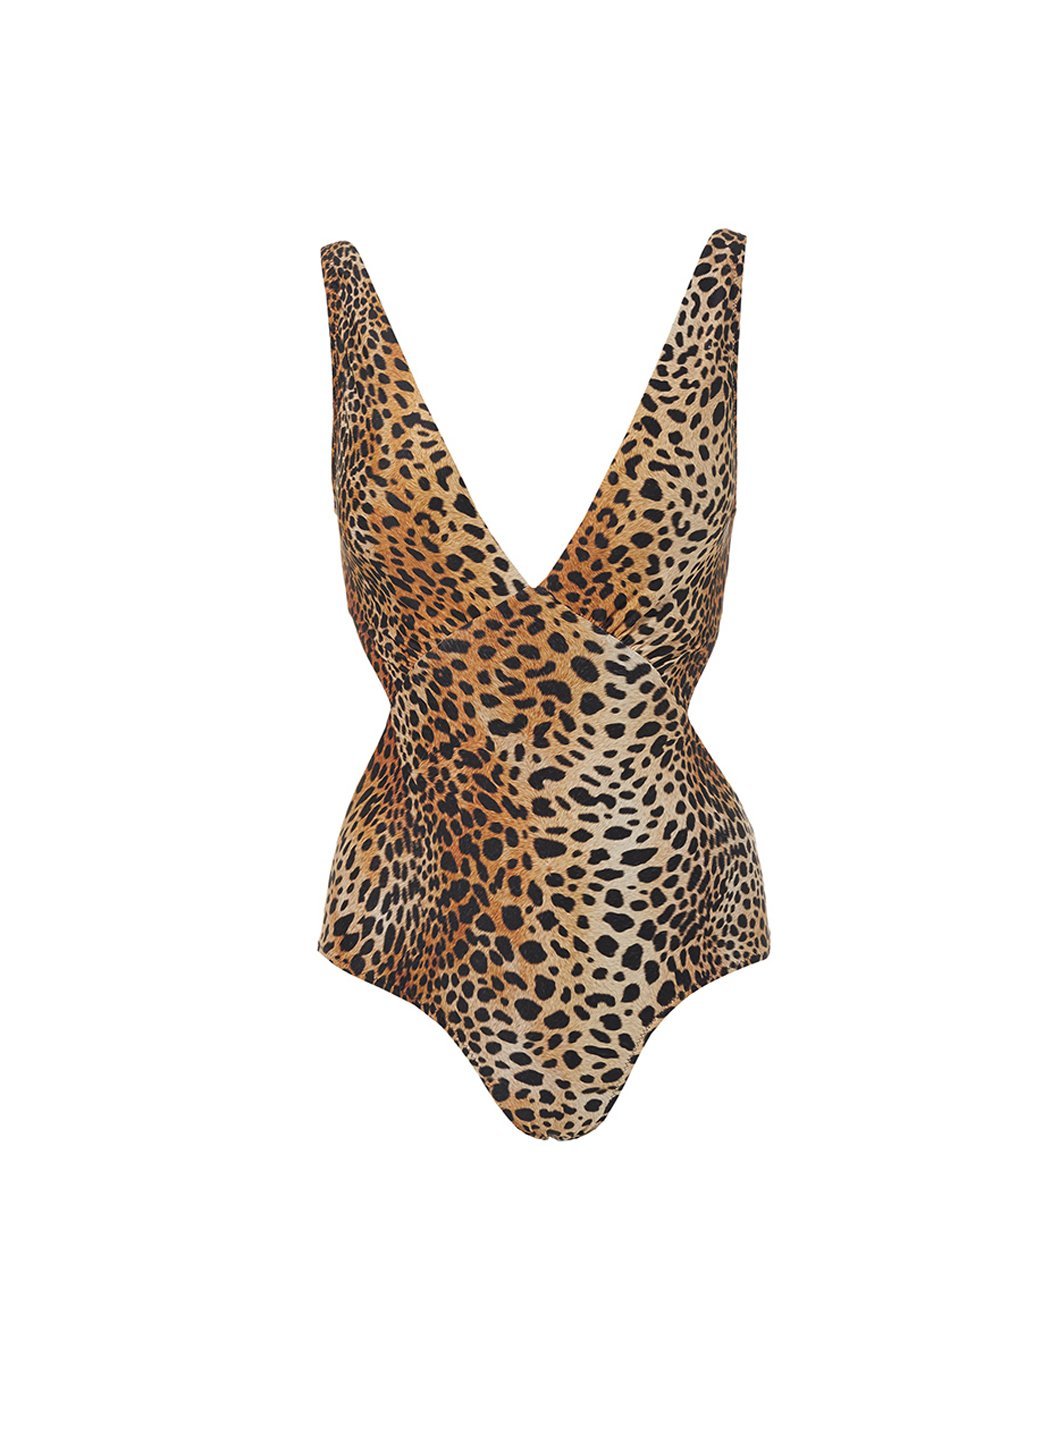 delmar cheetah overtheshoulder vneck cutout onepiece swimsuit 2019